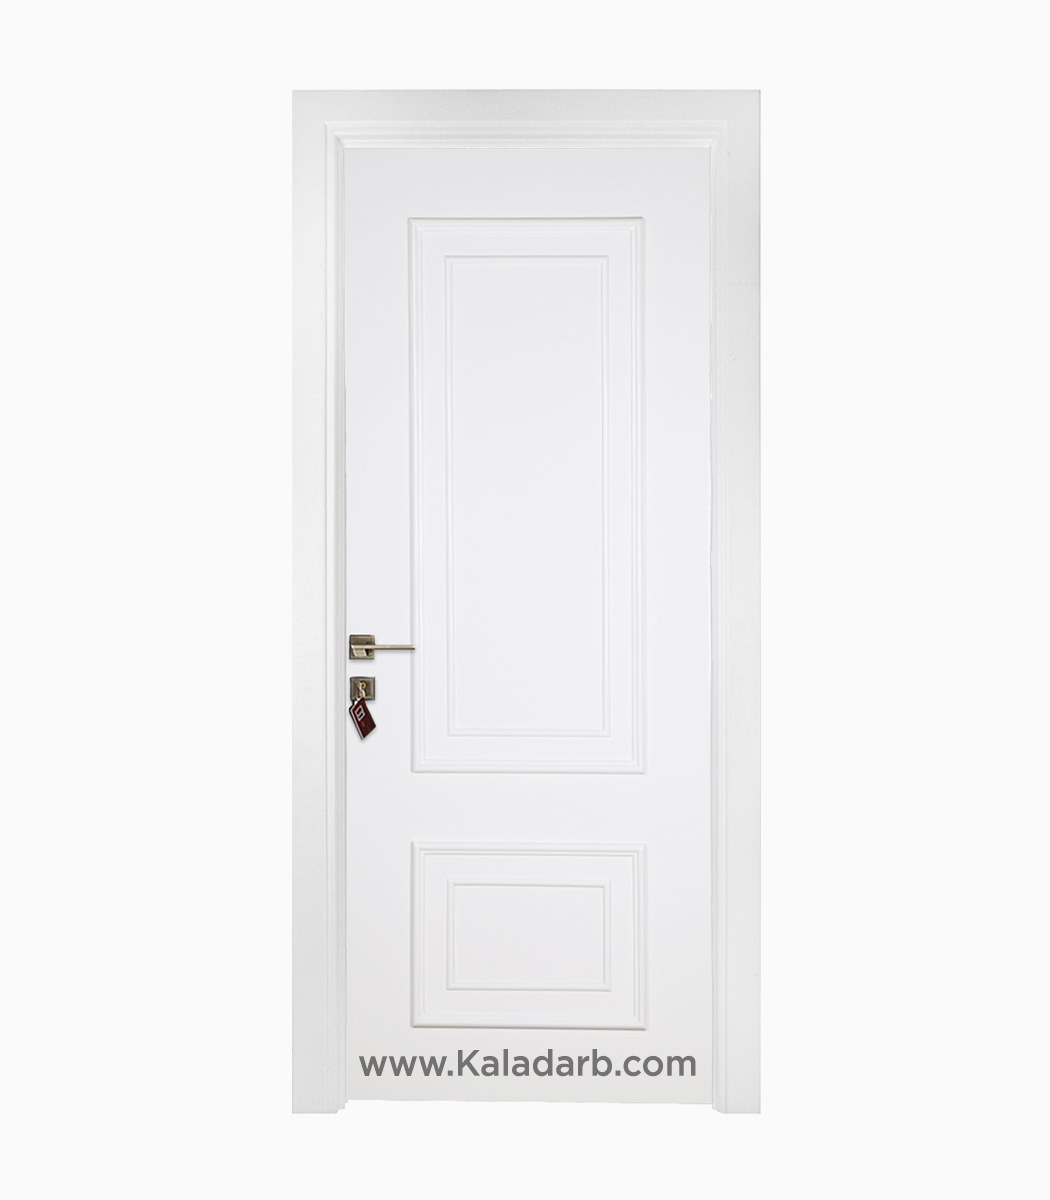 کالادرب - درب اتاقی کد 178